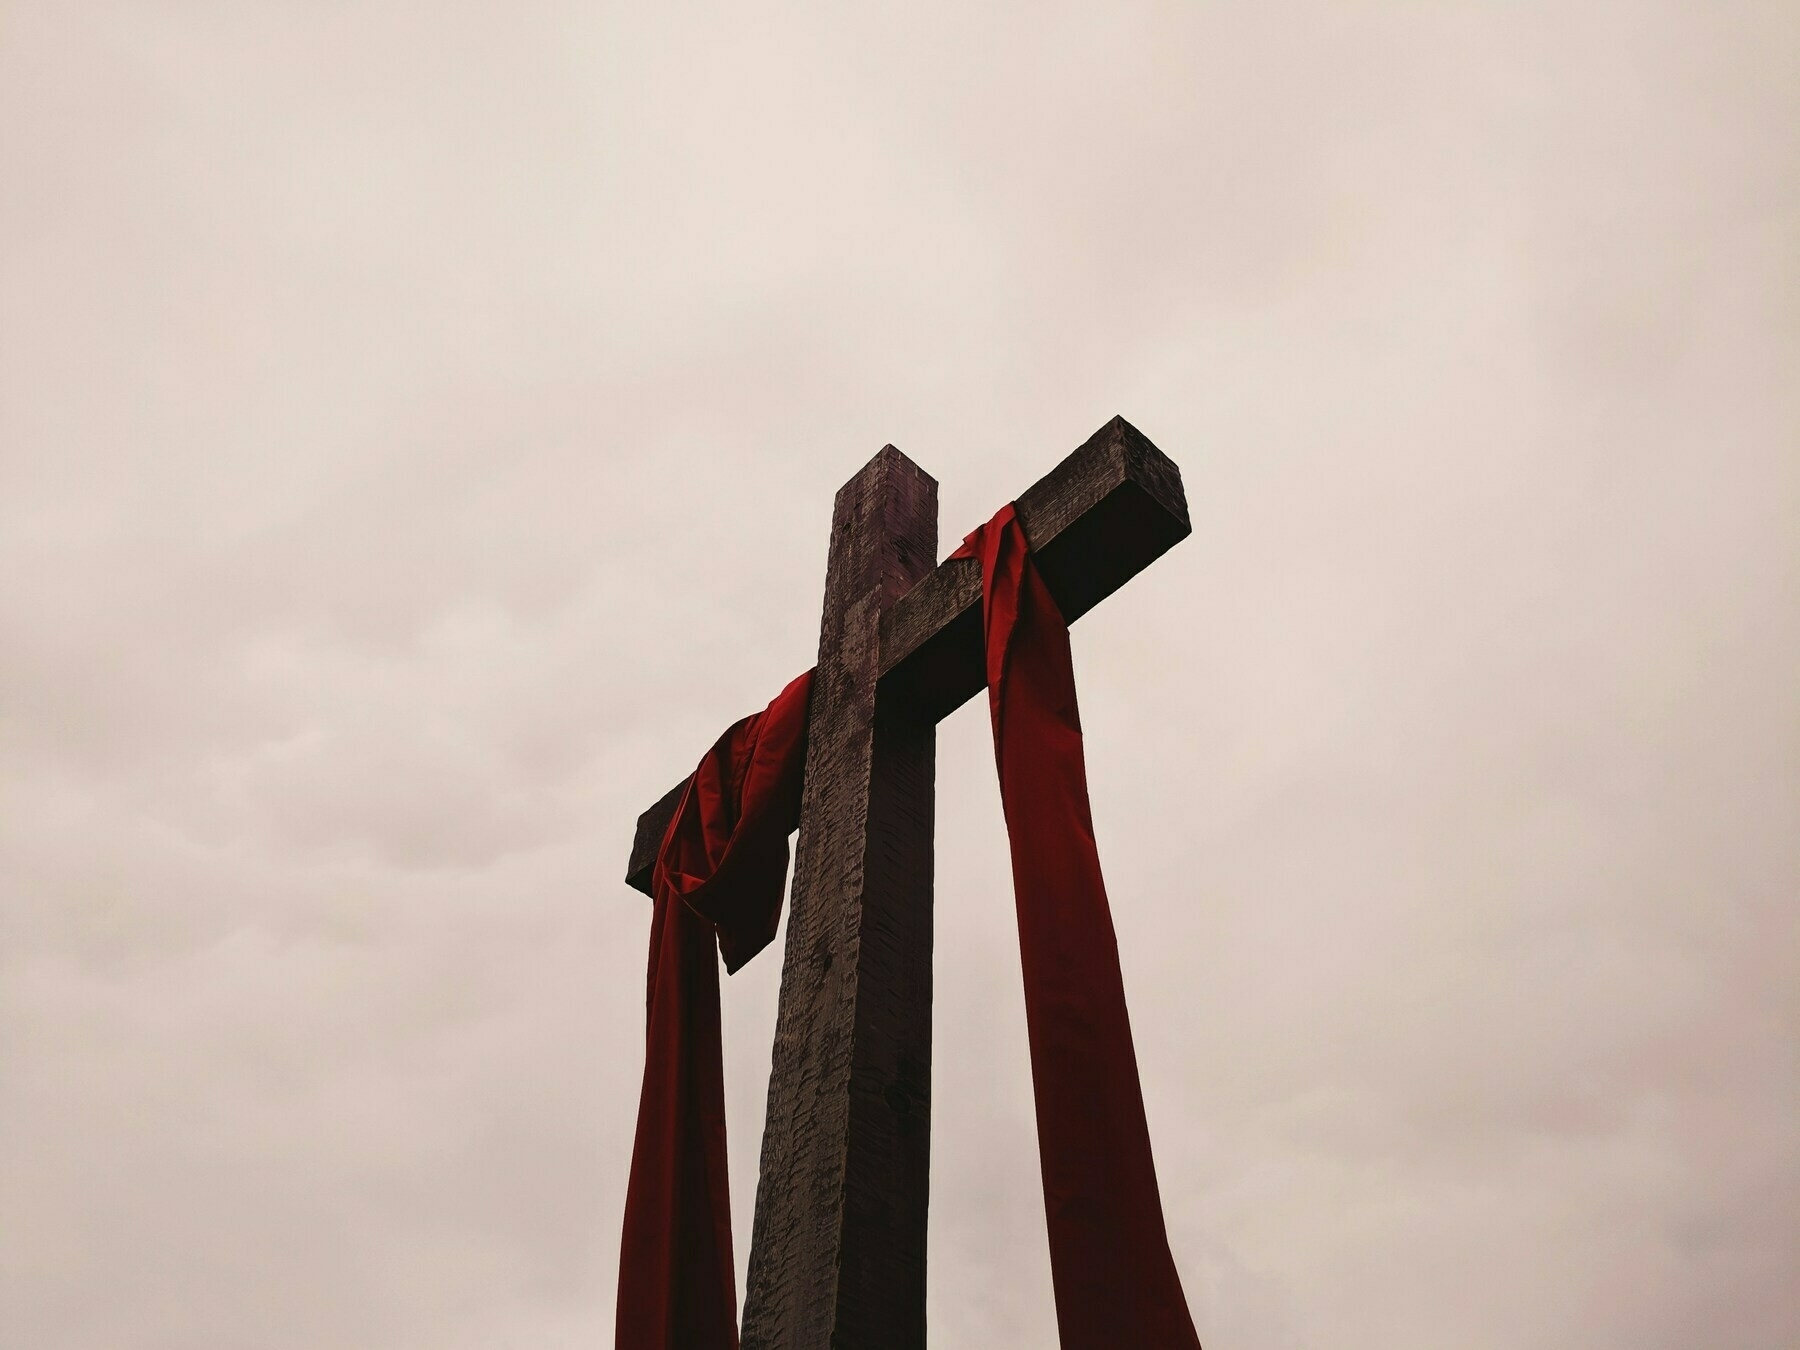 a cross draped with a purple sash against a cloudy sky